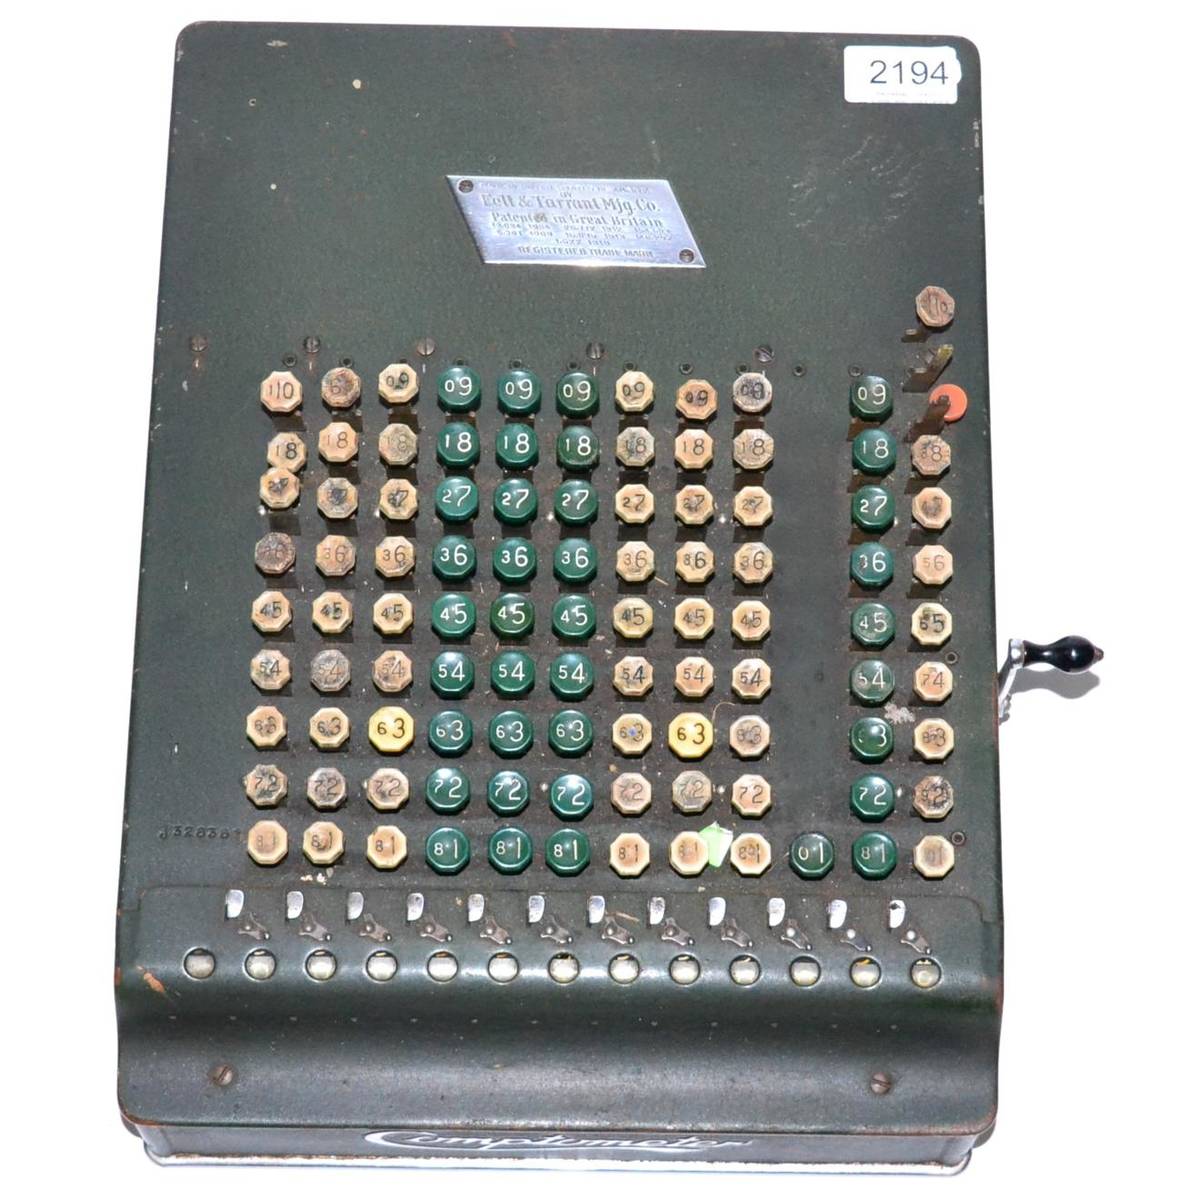 Lot 2194 - A 'Comptometer' Adding Machine by Fell & Tarrant Mfg Co., last patent 1913